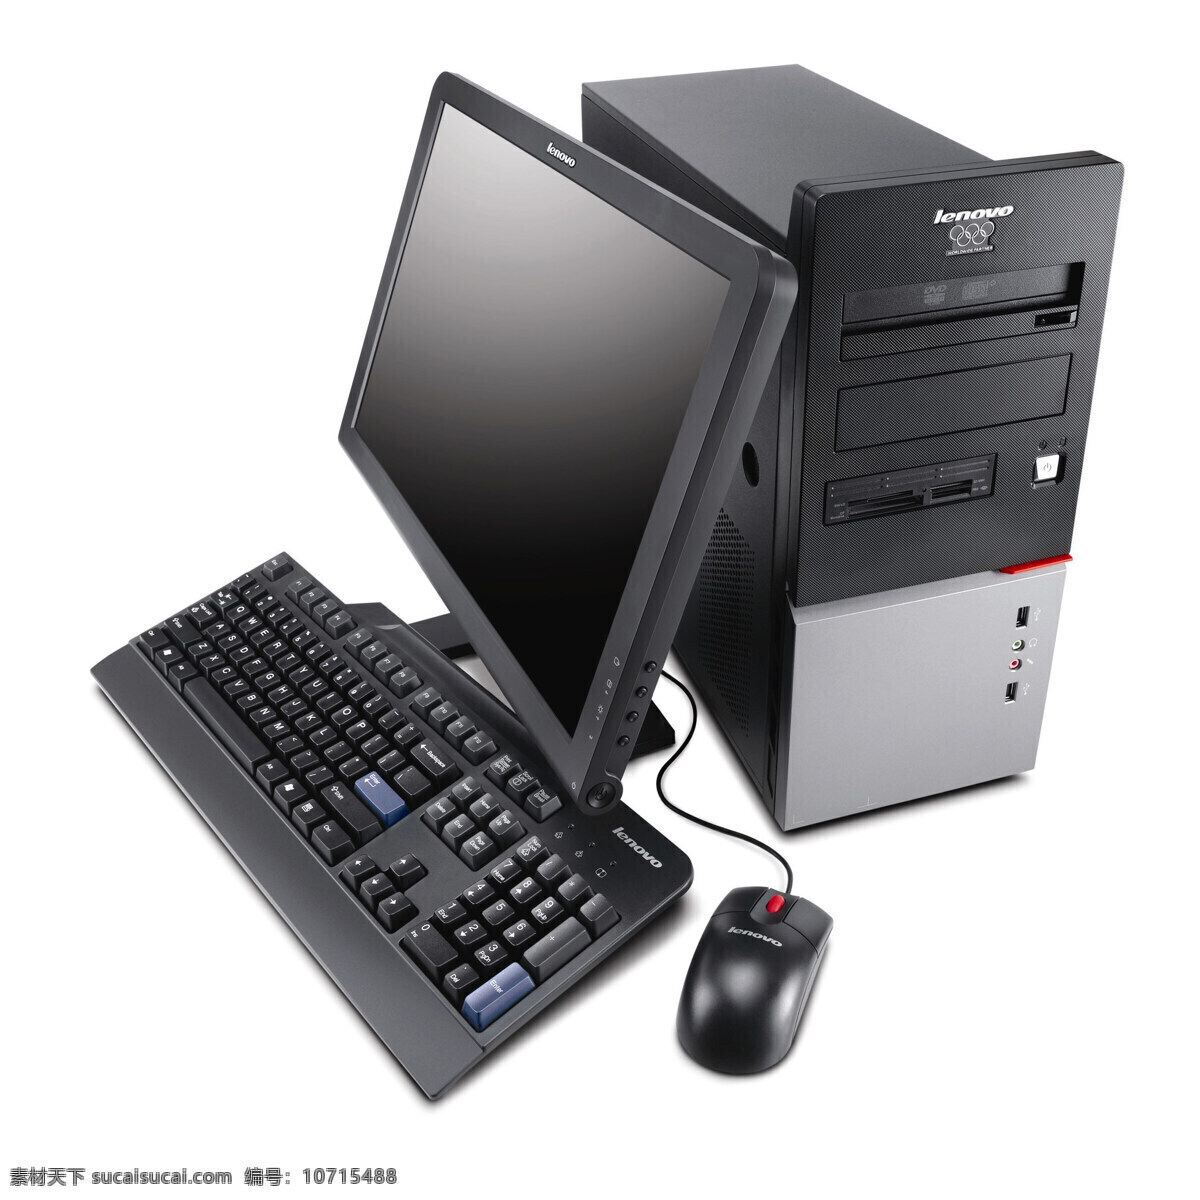 lenovo 电脑 电脑网络 计算机 键盘 联想 联想电脑 摄影图库 主机 鼠标 生活百科 矢量图 现代科技